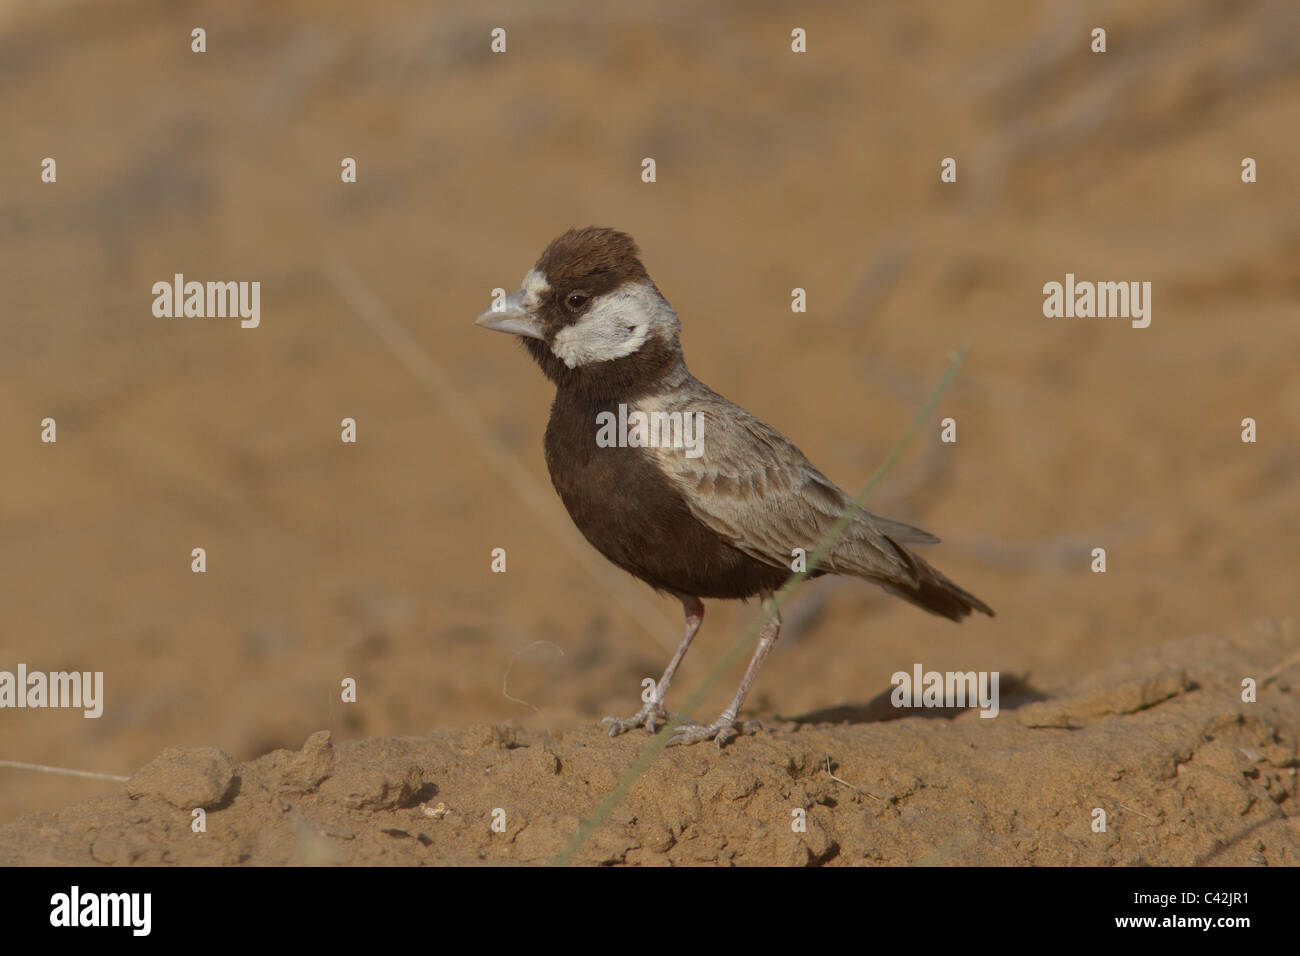 Nero-incoronato Sparrow-allodola. (Maschio) con prominenti crest display. Fotografato a tal Chapar Wildlife Sanctuary, Rajasthan, India Foto Stock